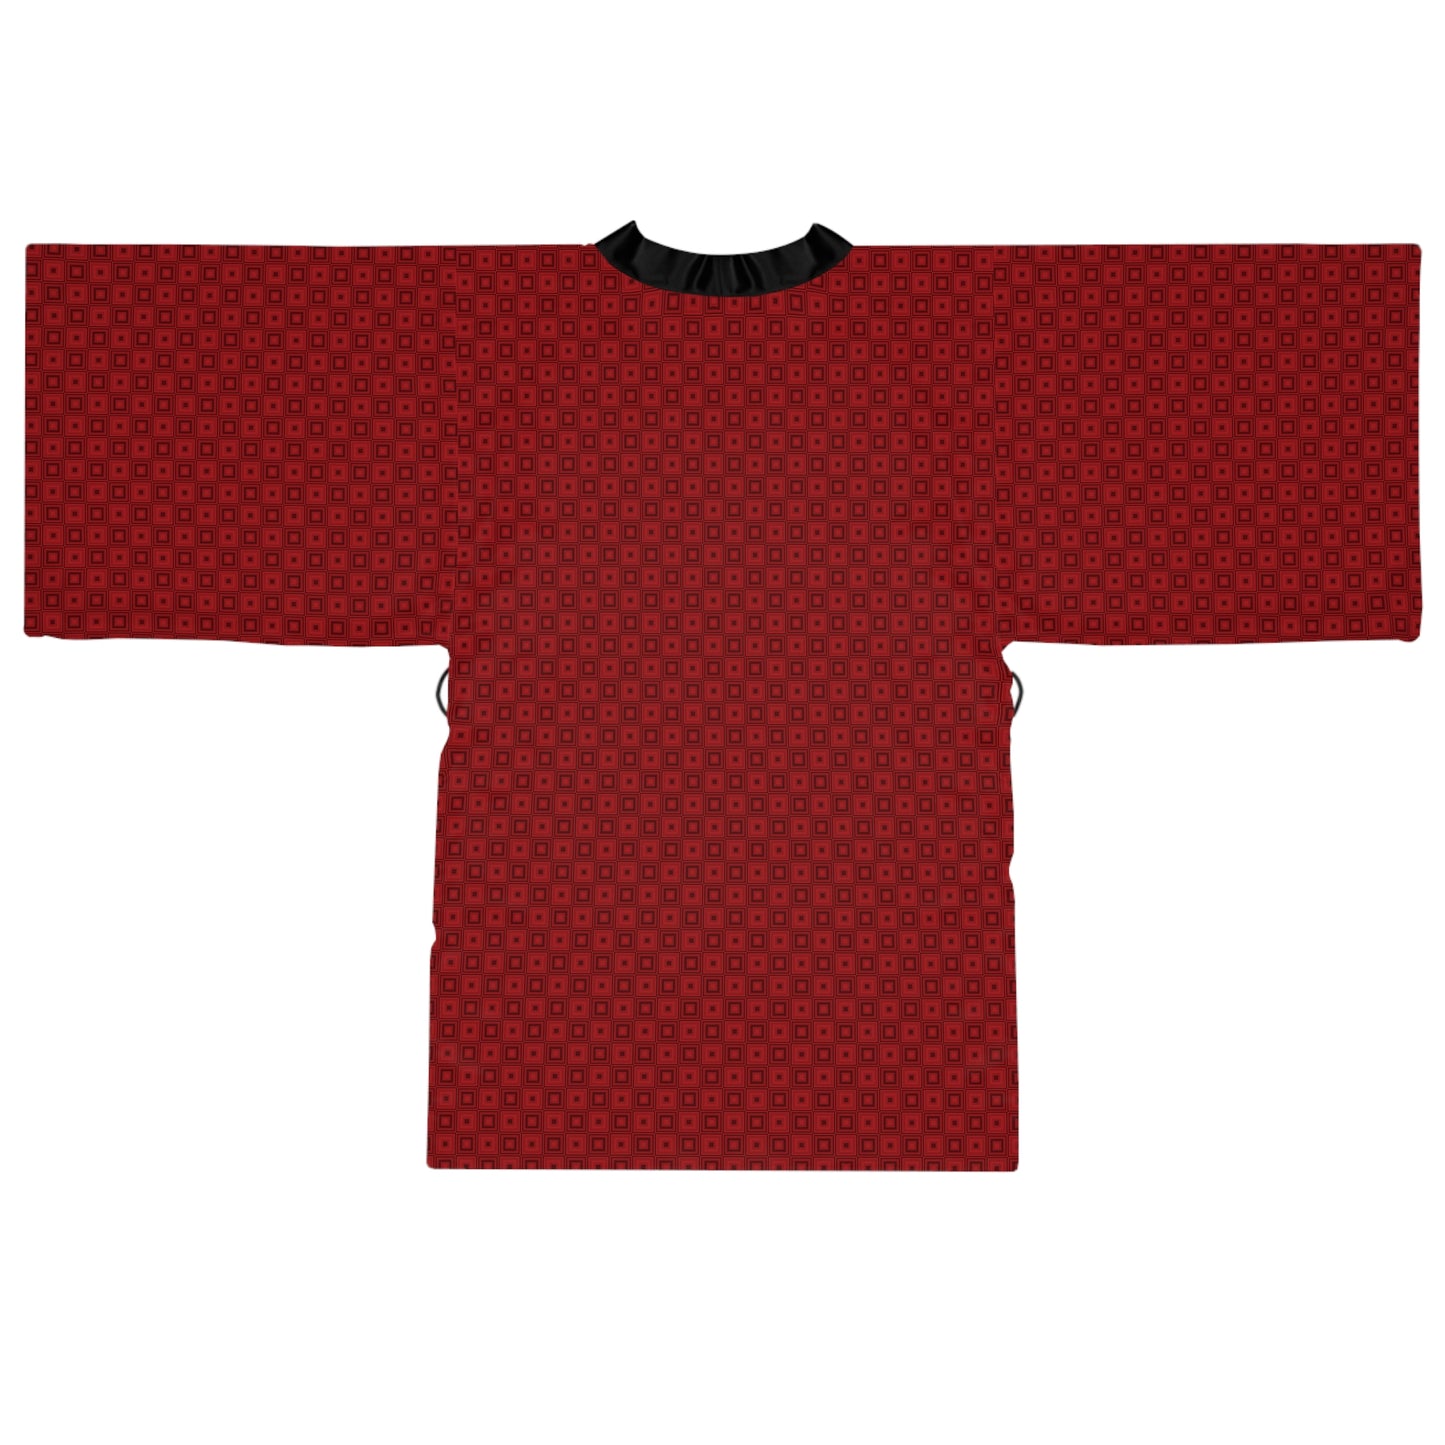 Blood Red - Mordant Red 19 Squares - Long Sleeve Kimono Robe (AOP)